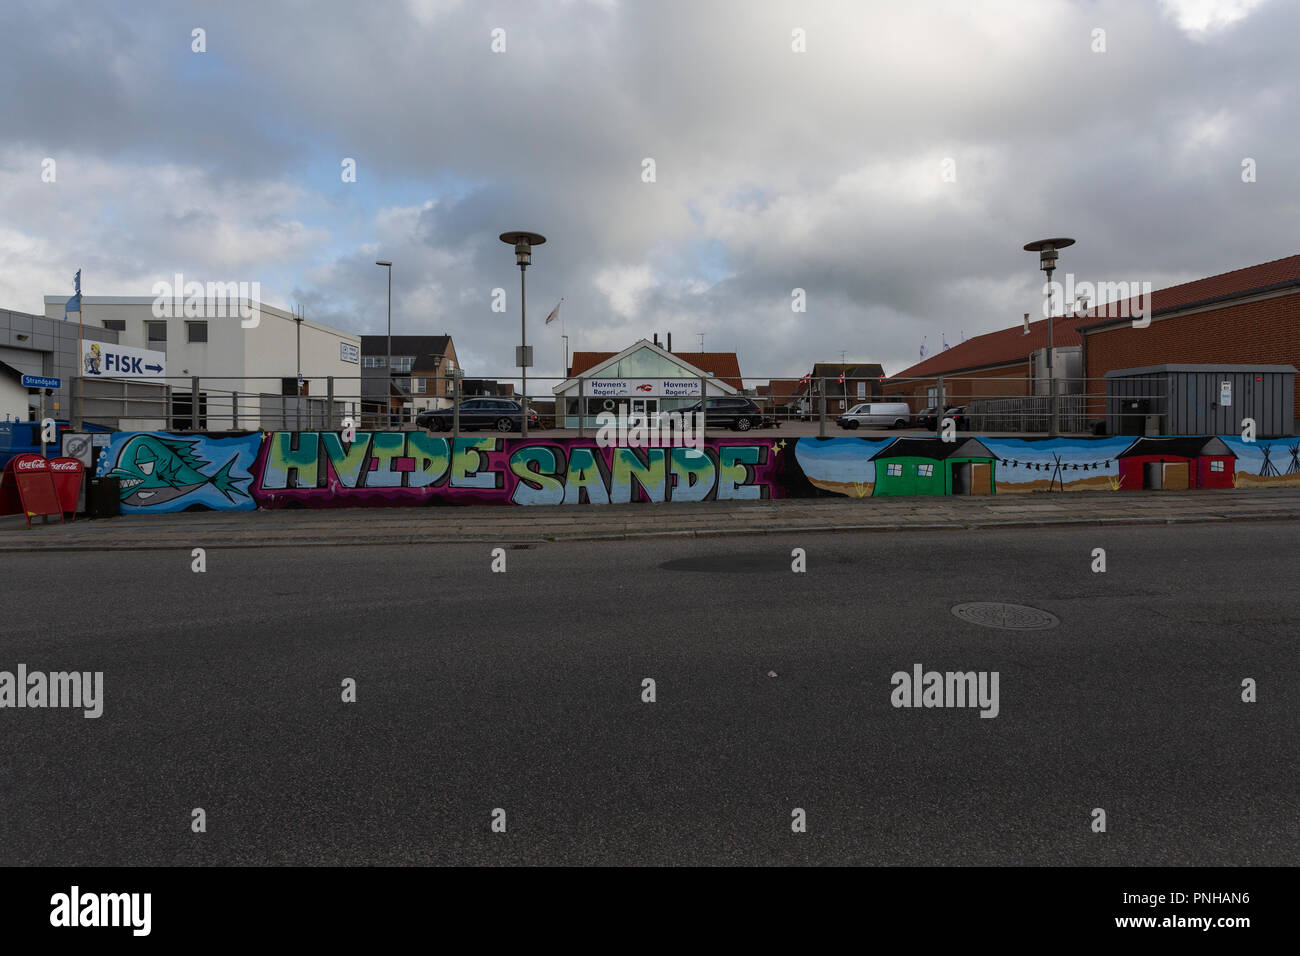 Street Art artistes ont décoré les bâtiments et murs avec grafitti art à Grenaa, Danemark. Street Art Künstler haben in Hvide Sande, Guernsey, G Banque D'Images